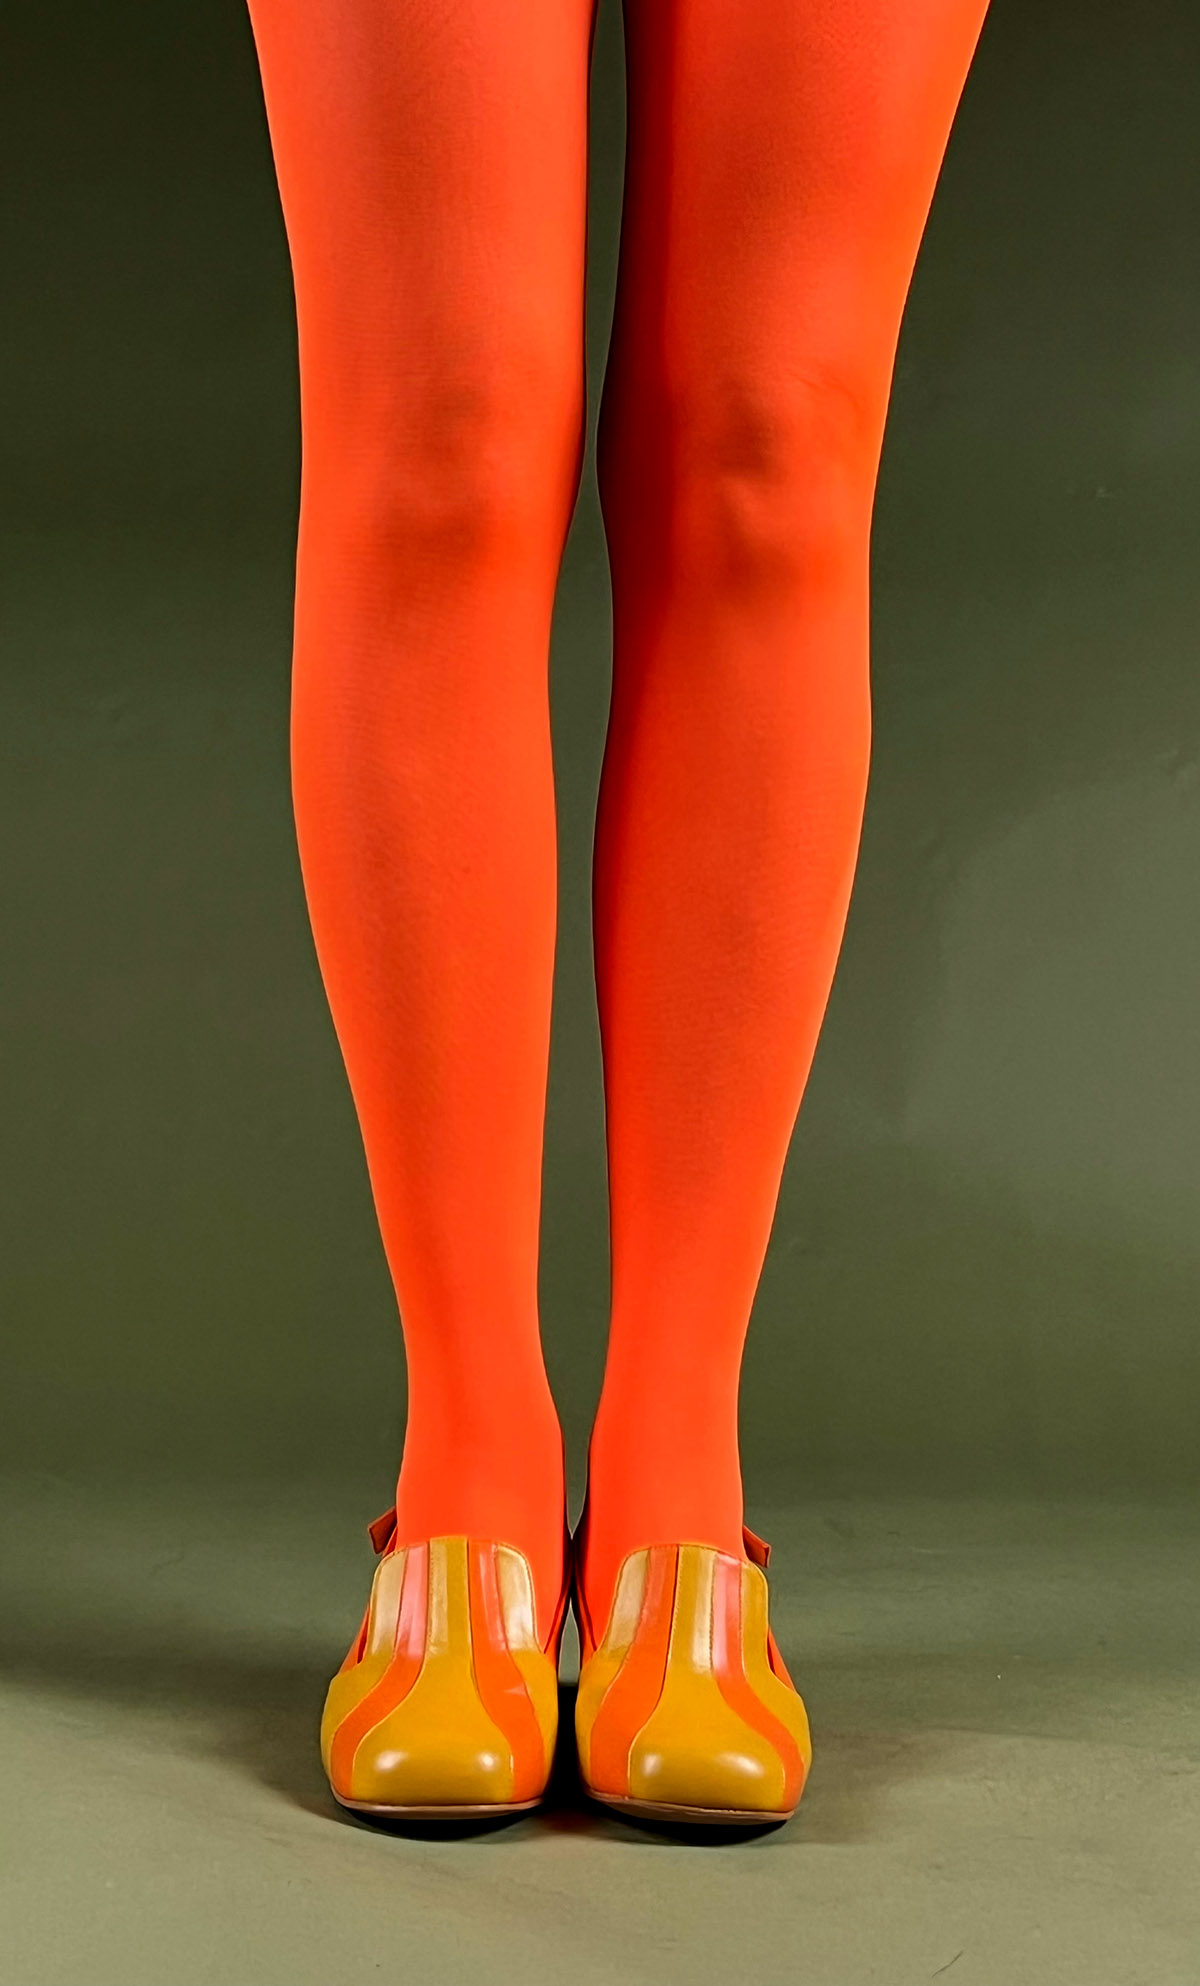 Orange 40 Denier Tights- ladies vintage retro 60s – 70s style – Mod Shoes